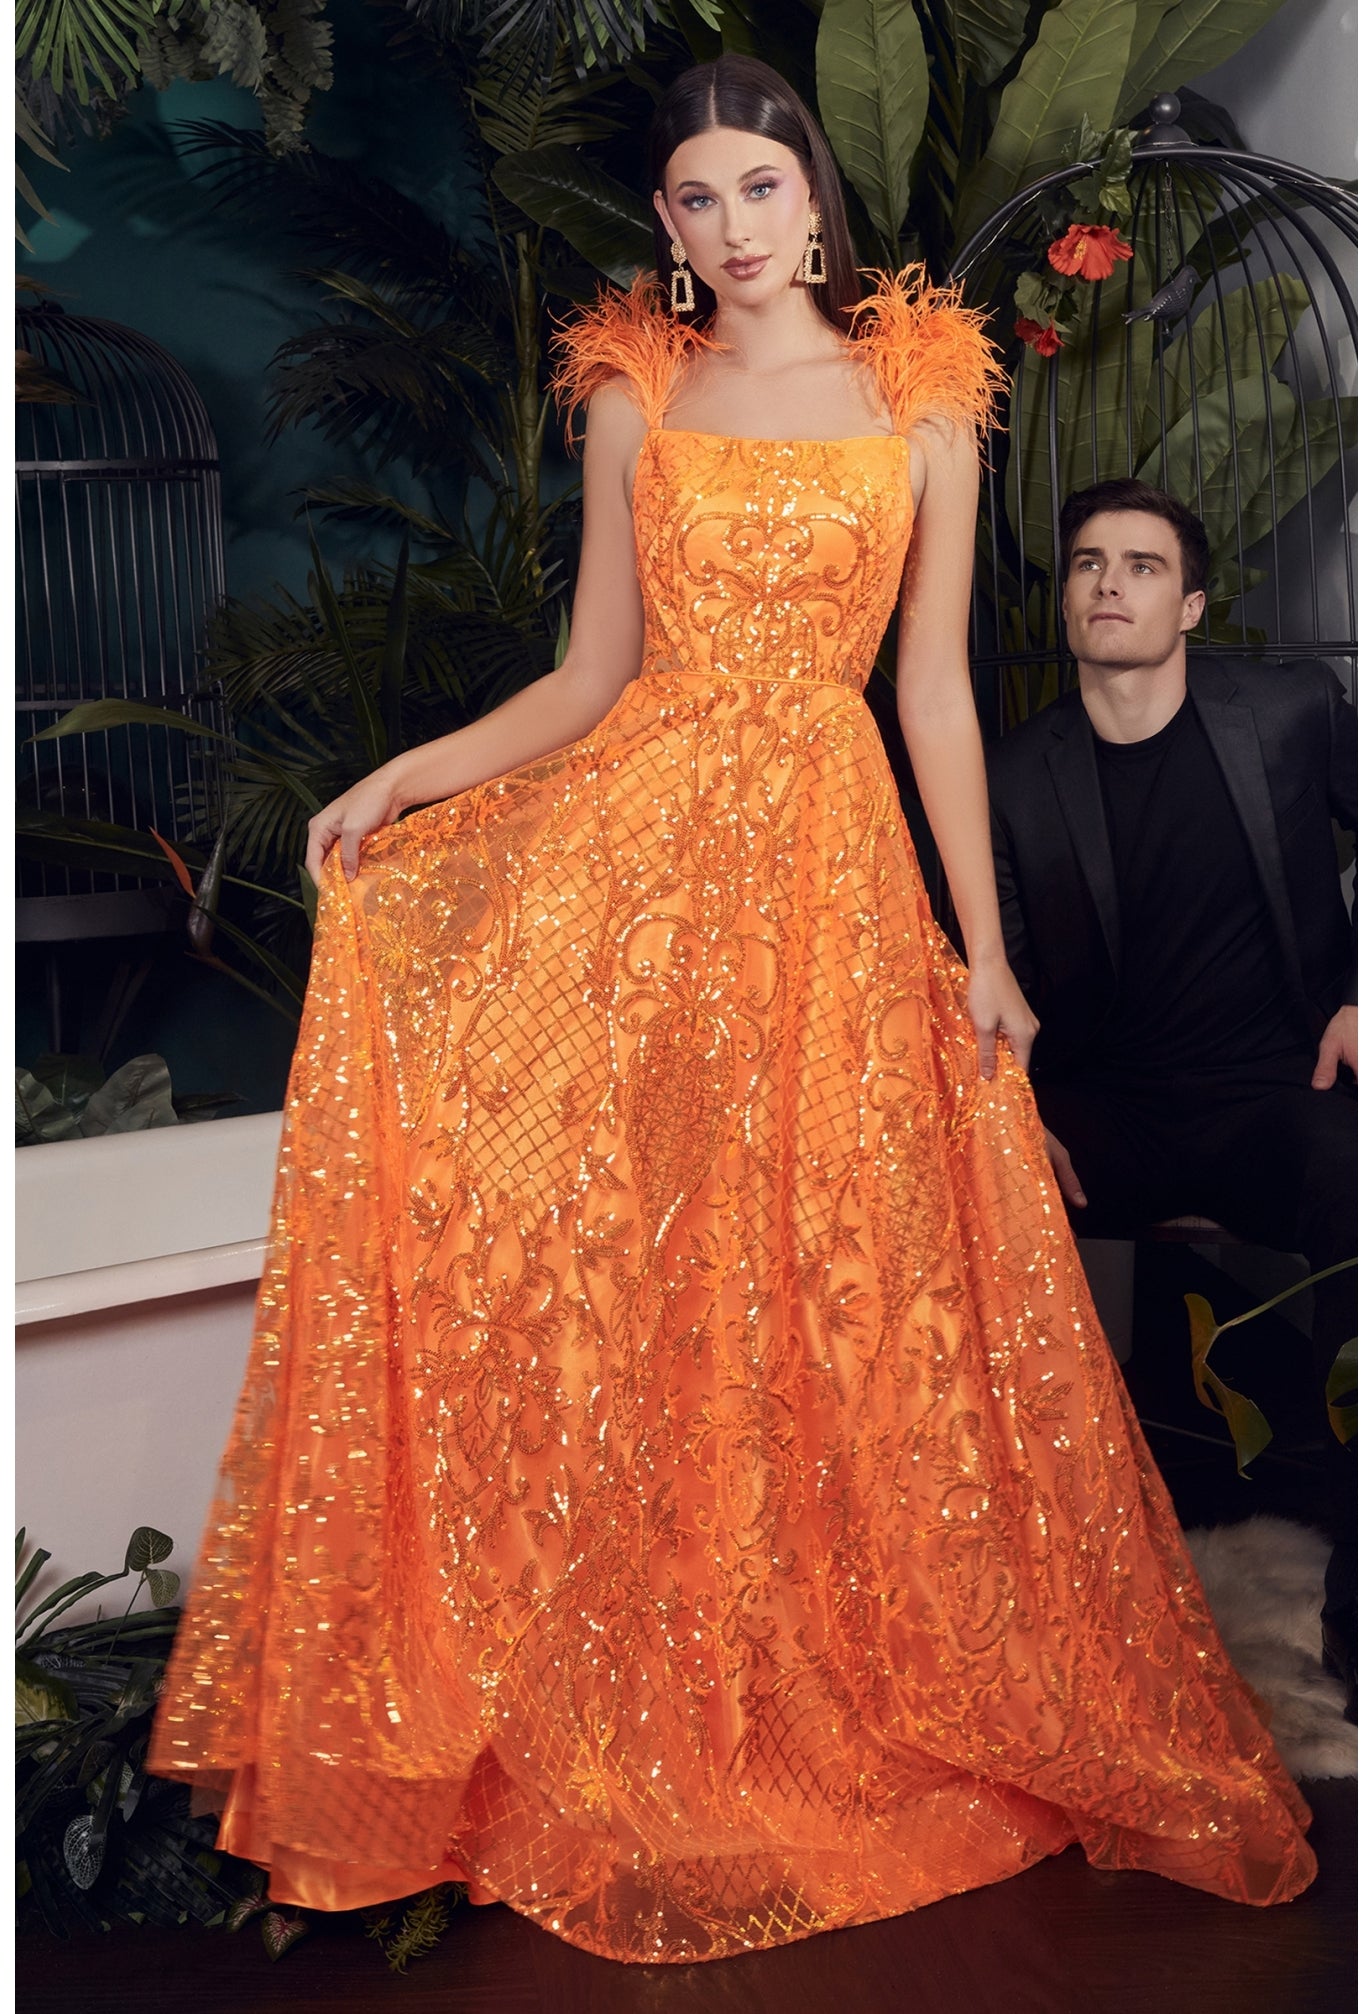 orange formal dress